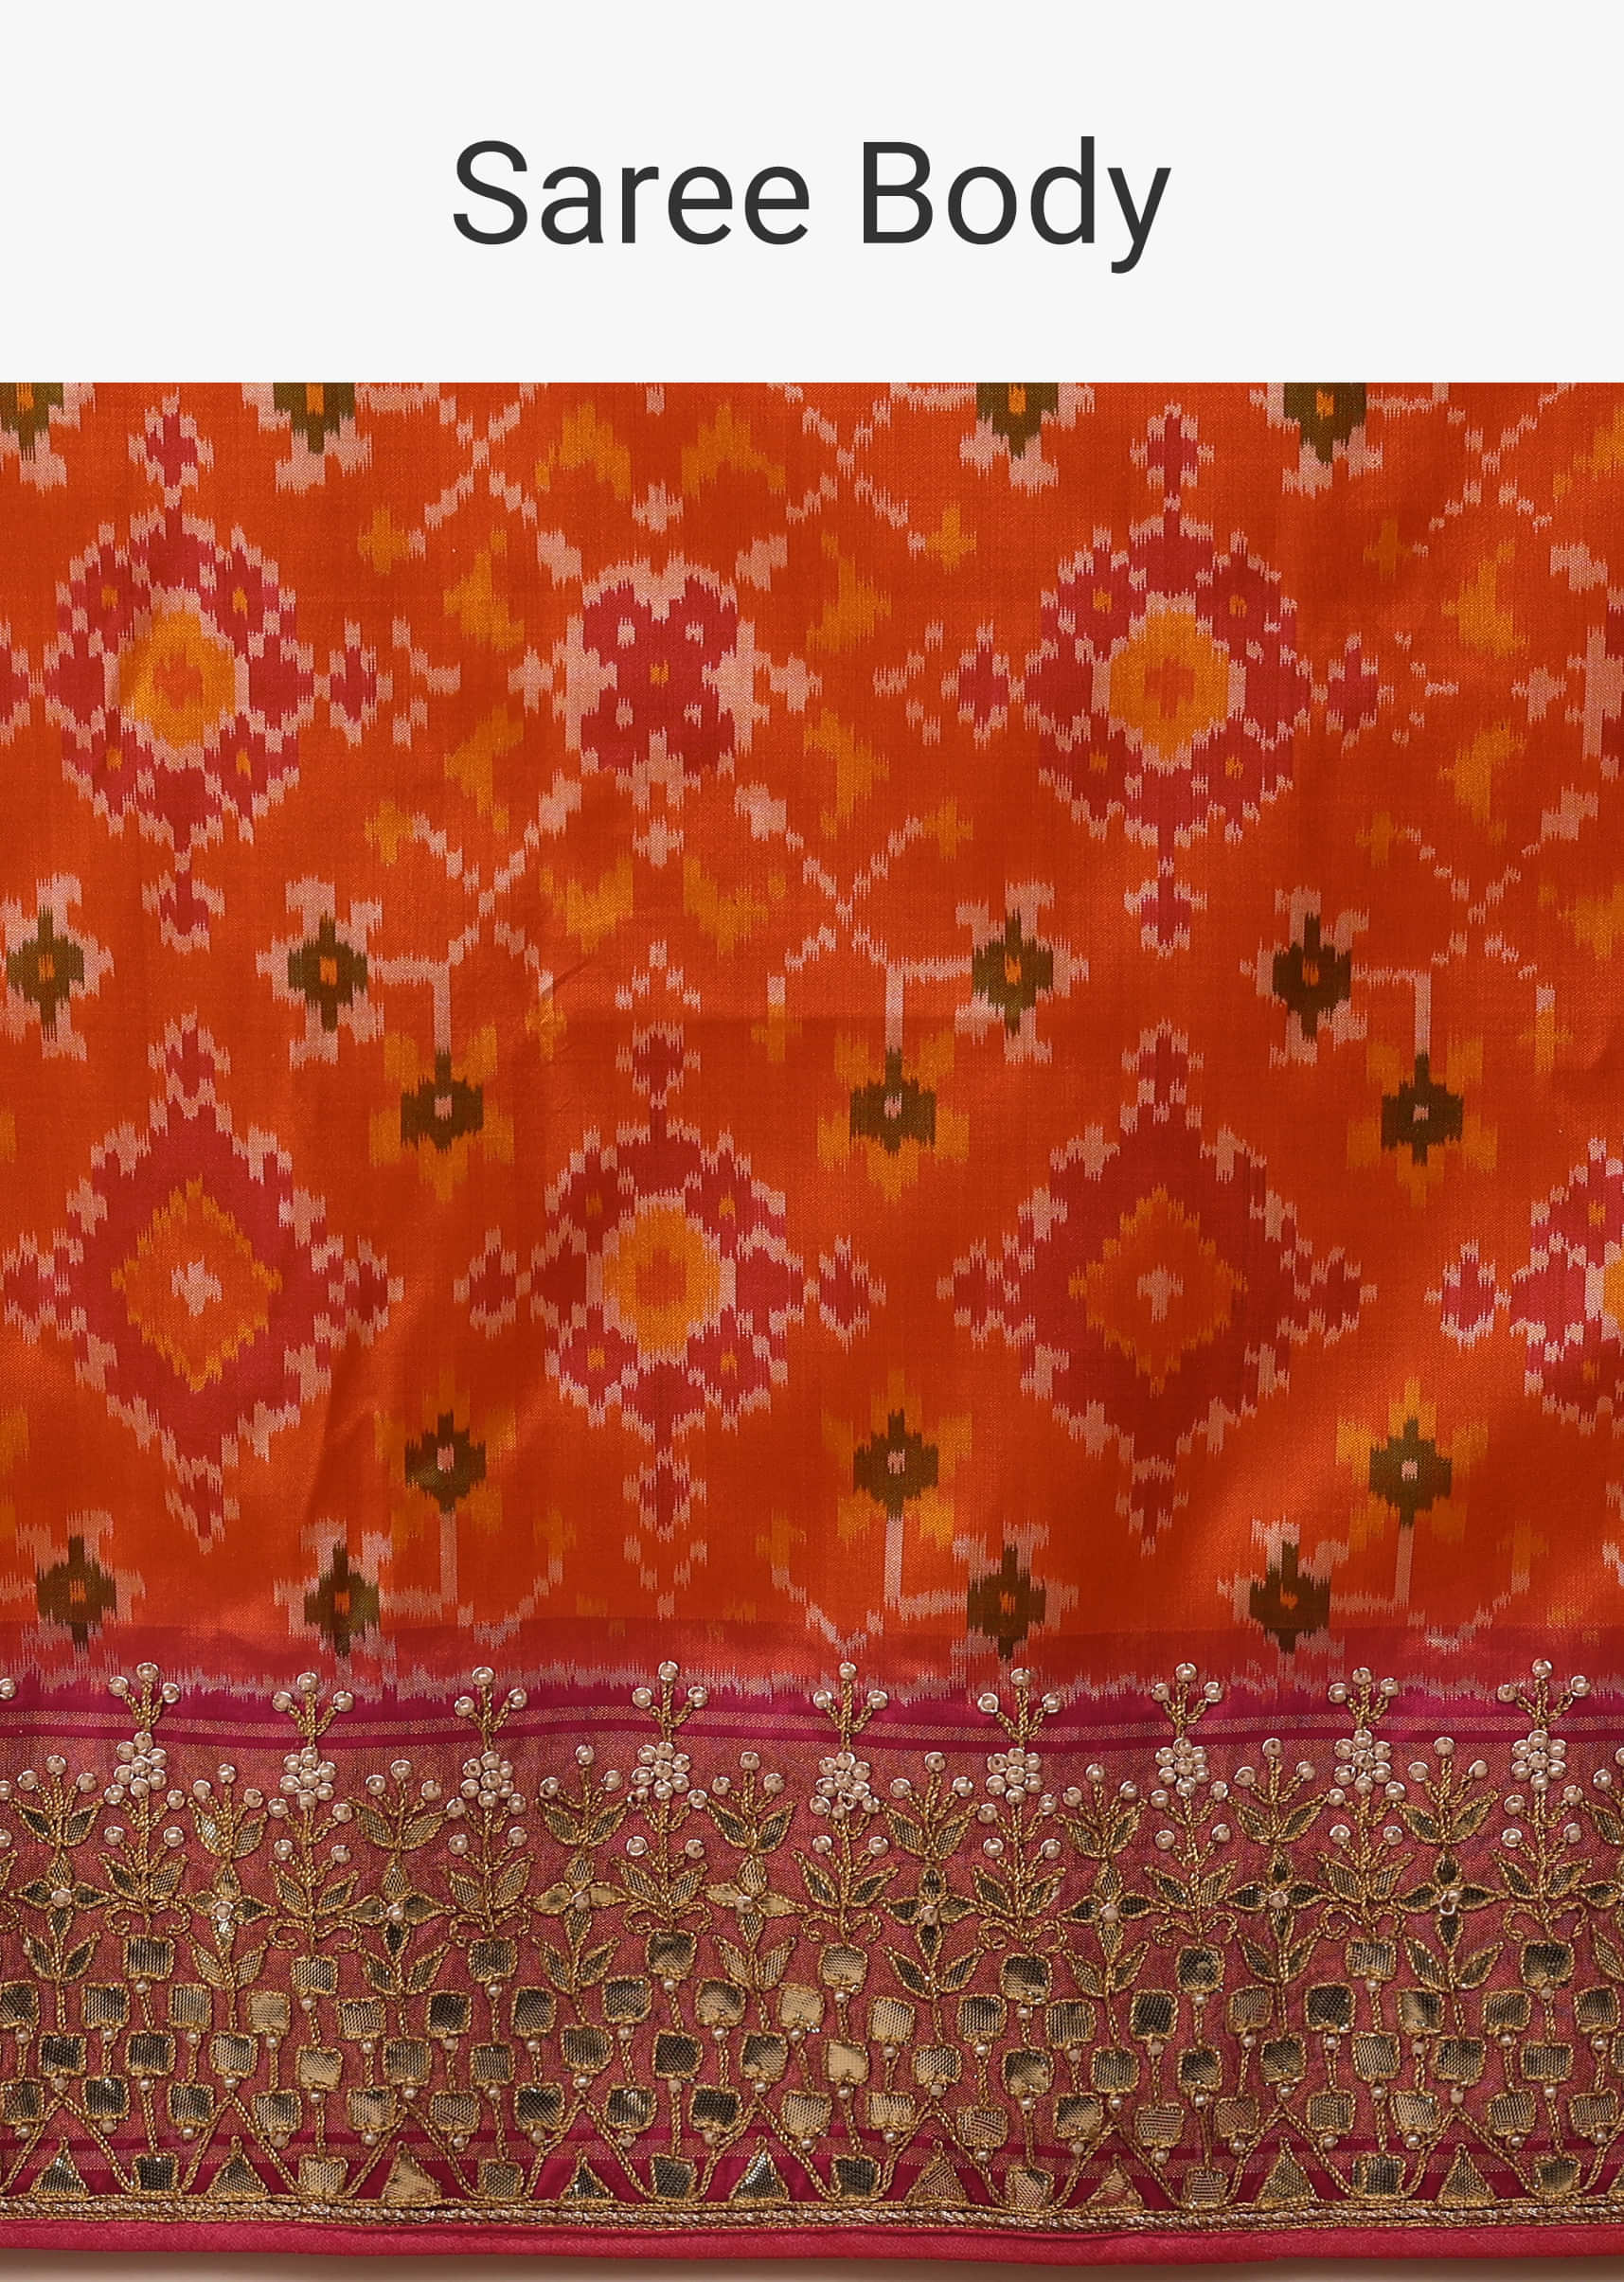 Fire Orange Saree In Pure Silk With Handloom Patola Ikat Weave